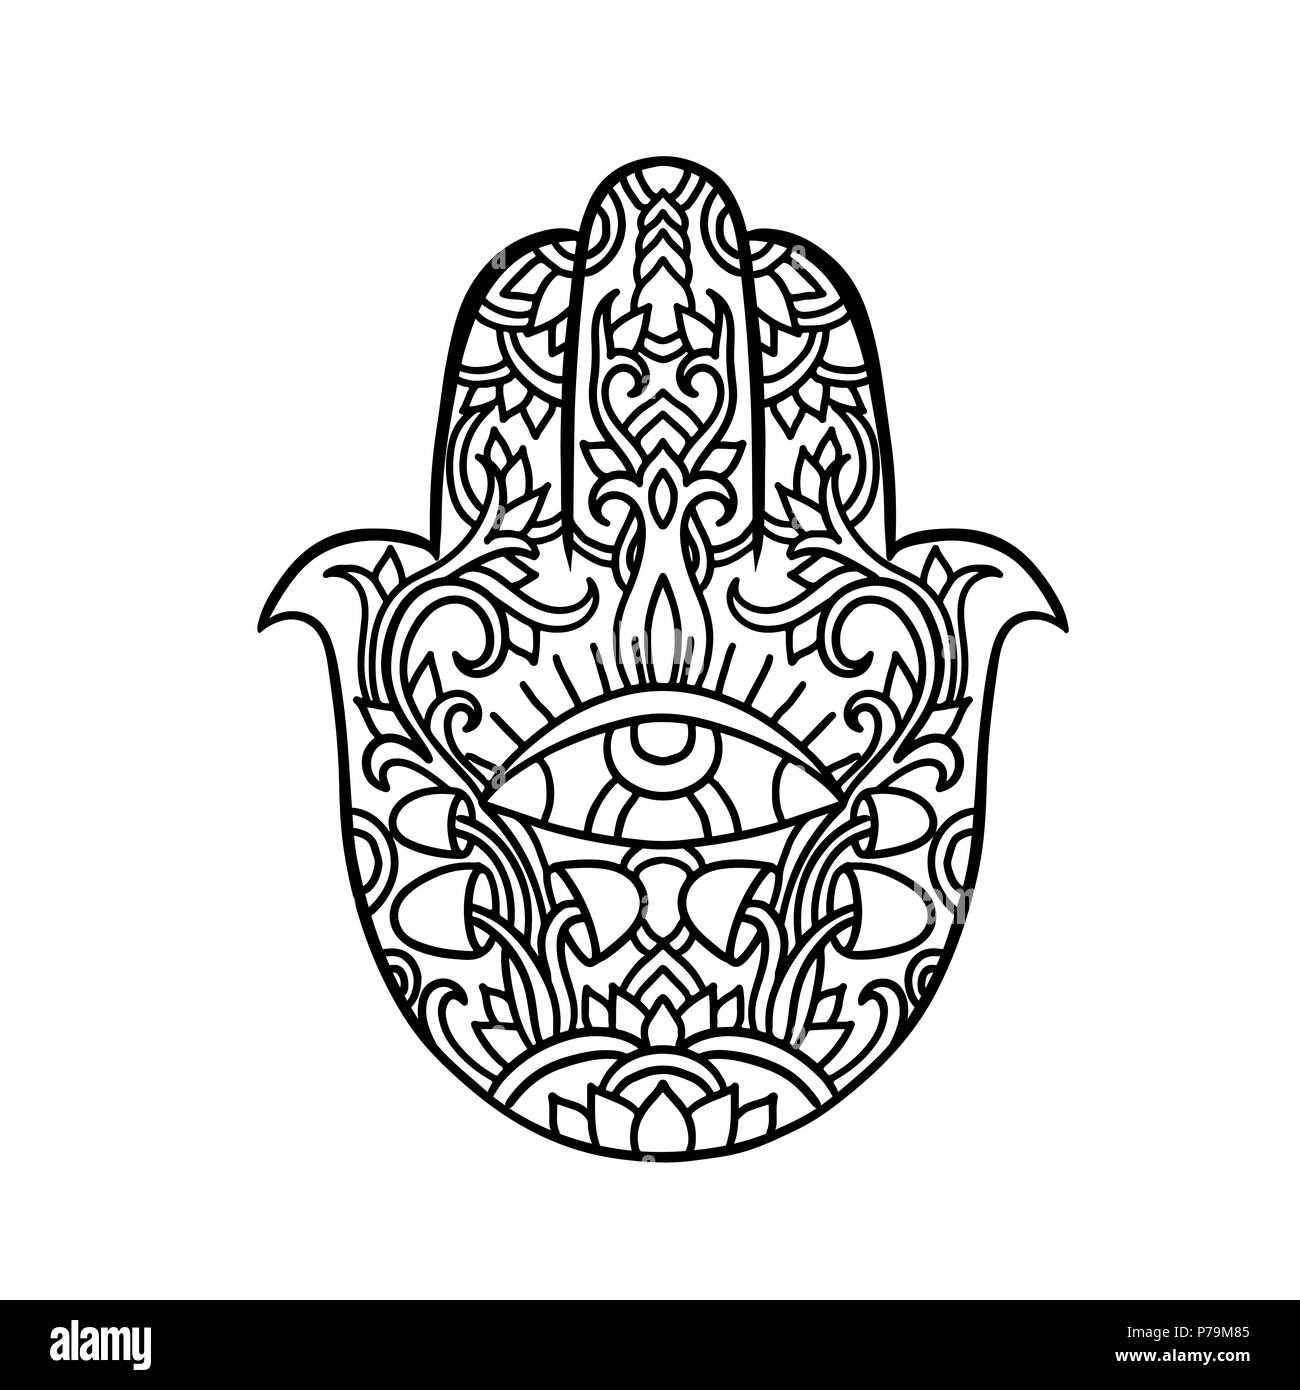 Hamsa symbol. Fatima hand pattern. Indian mandala ornament. Asian authentic vector illustration. Third eye. Stock Vector